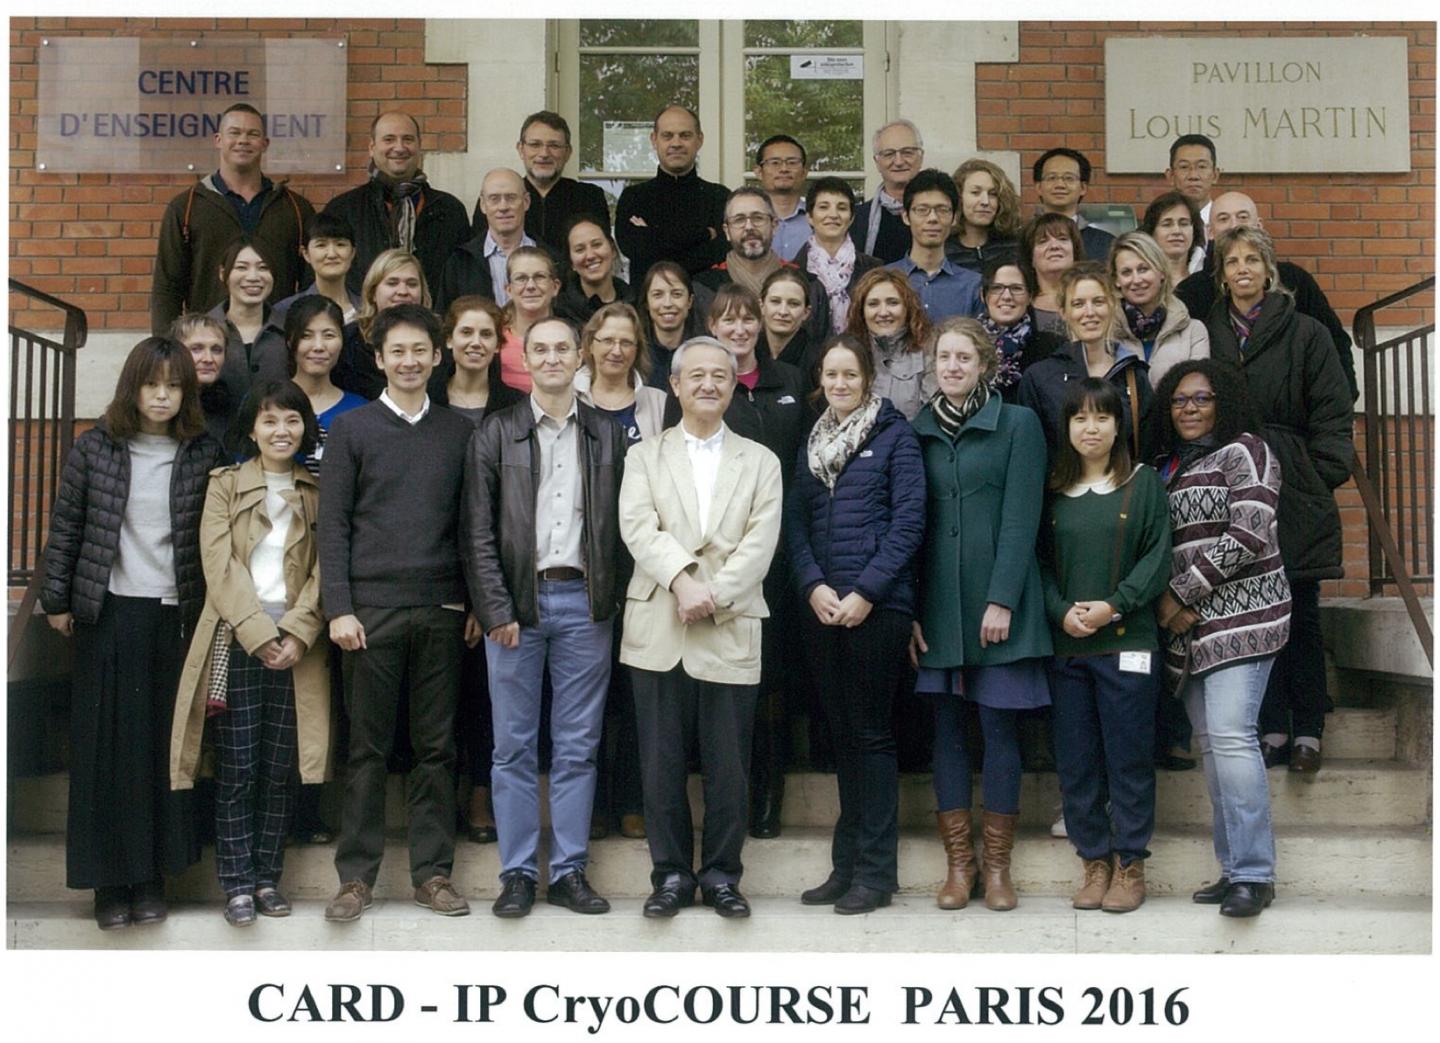 CARD-IP Cryo-Course Group Photo, Paris 2016